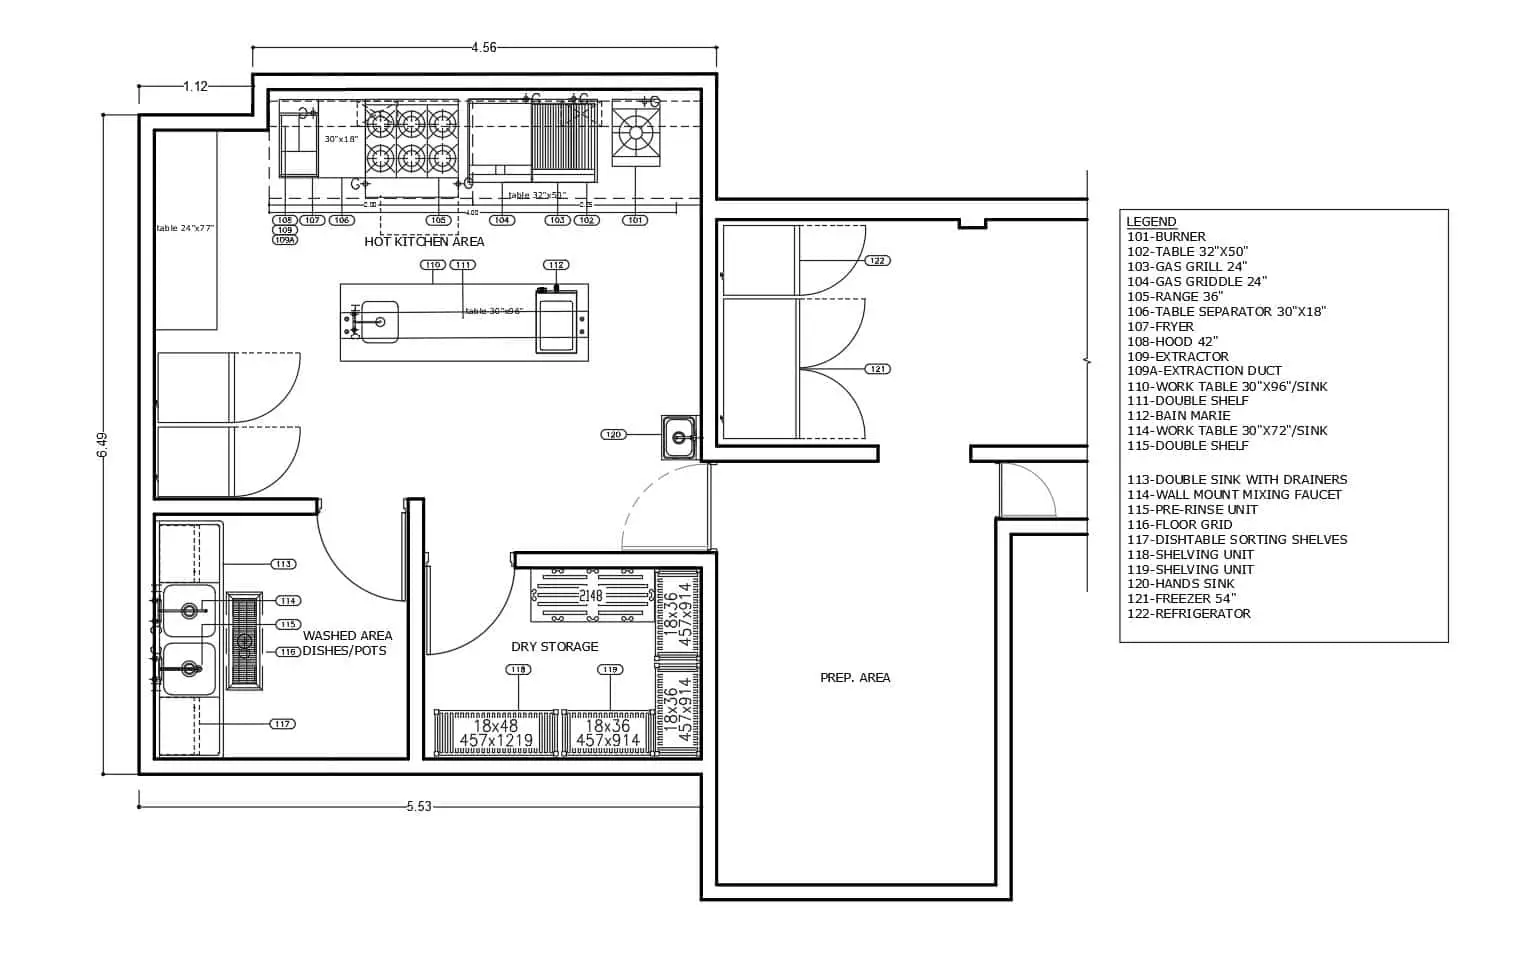 Small Commercial Kitchen Layout Floor Plan 0508202 - INOX KITCHEN DESIGN